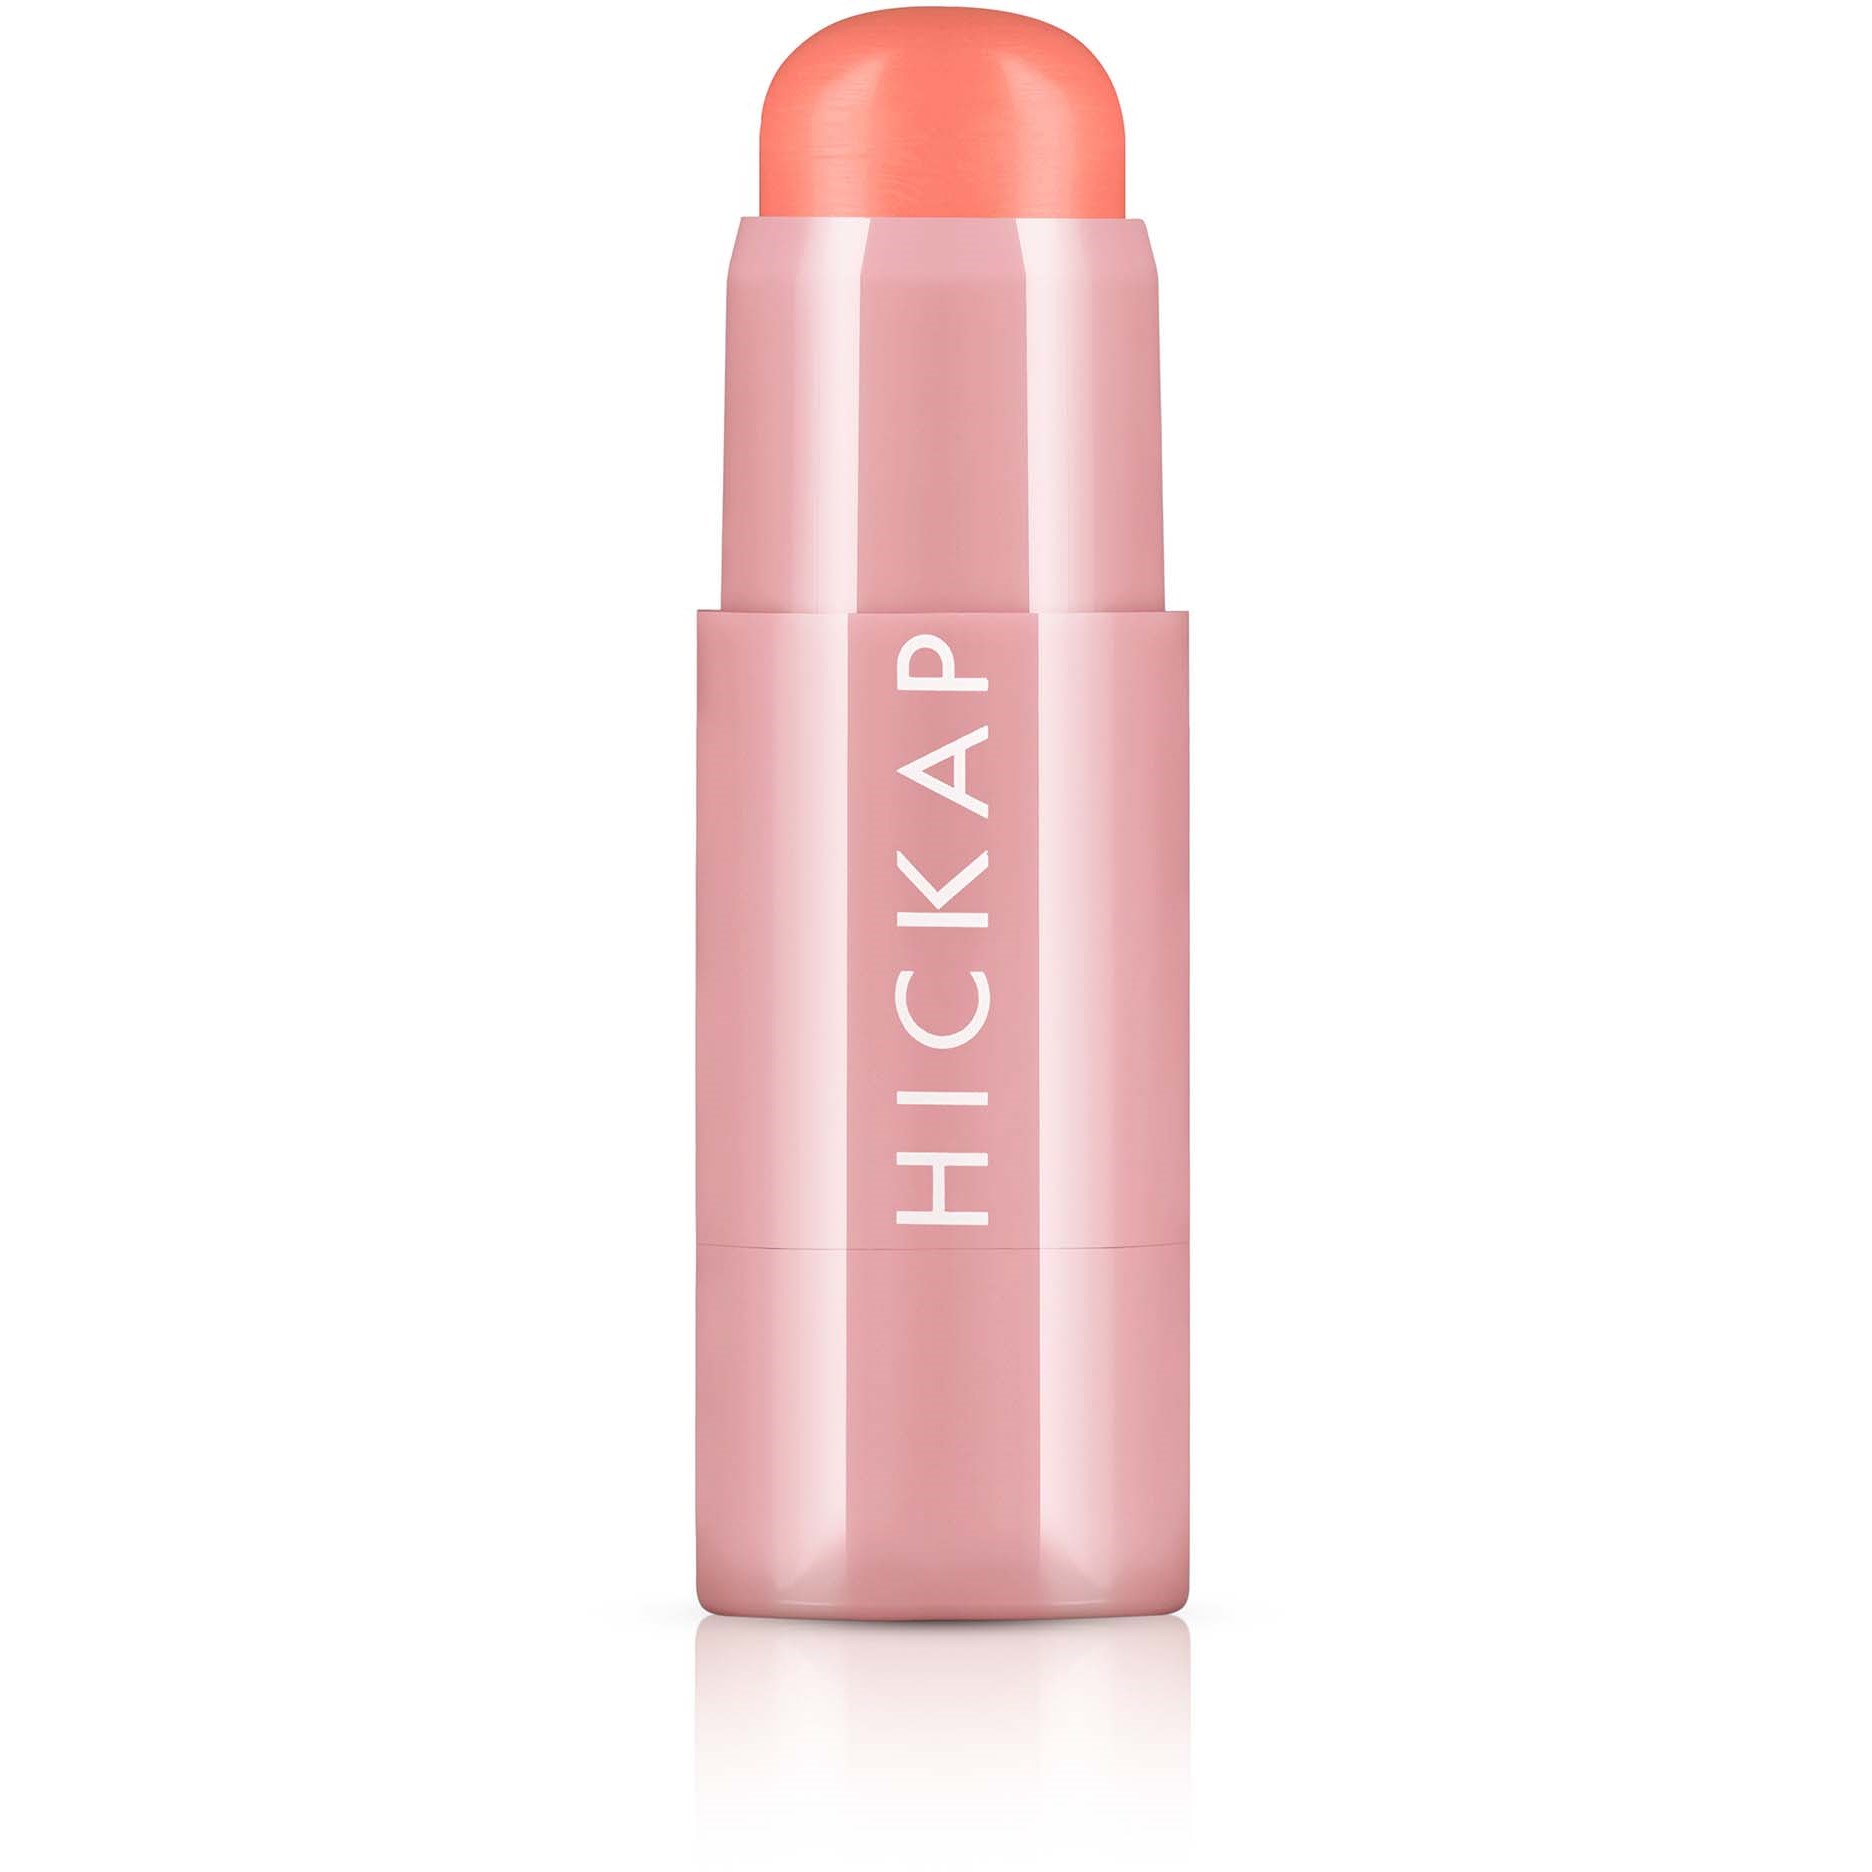 Hickap the wonder stick blush & lips coralicious